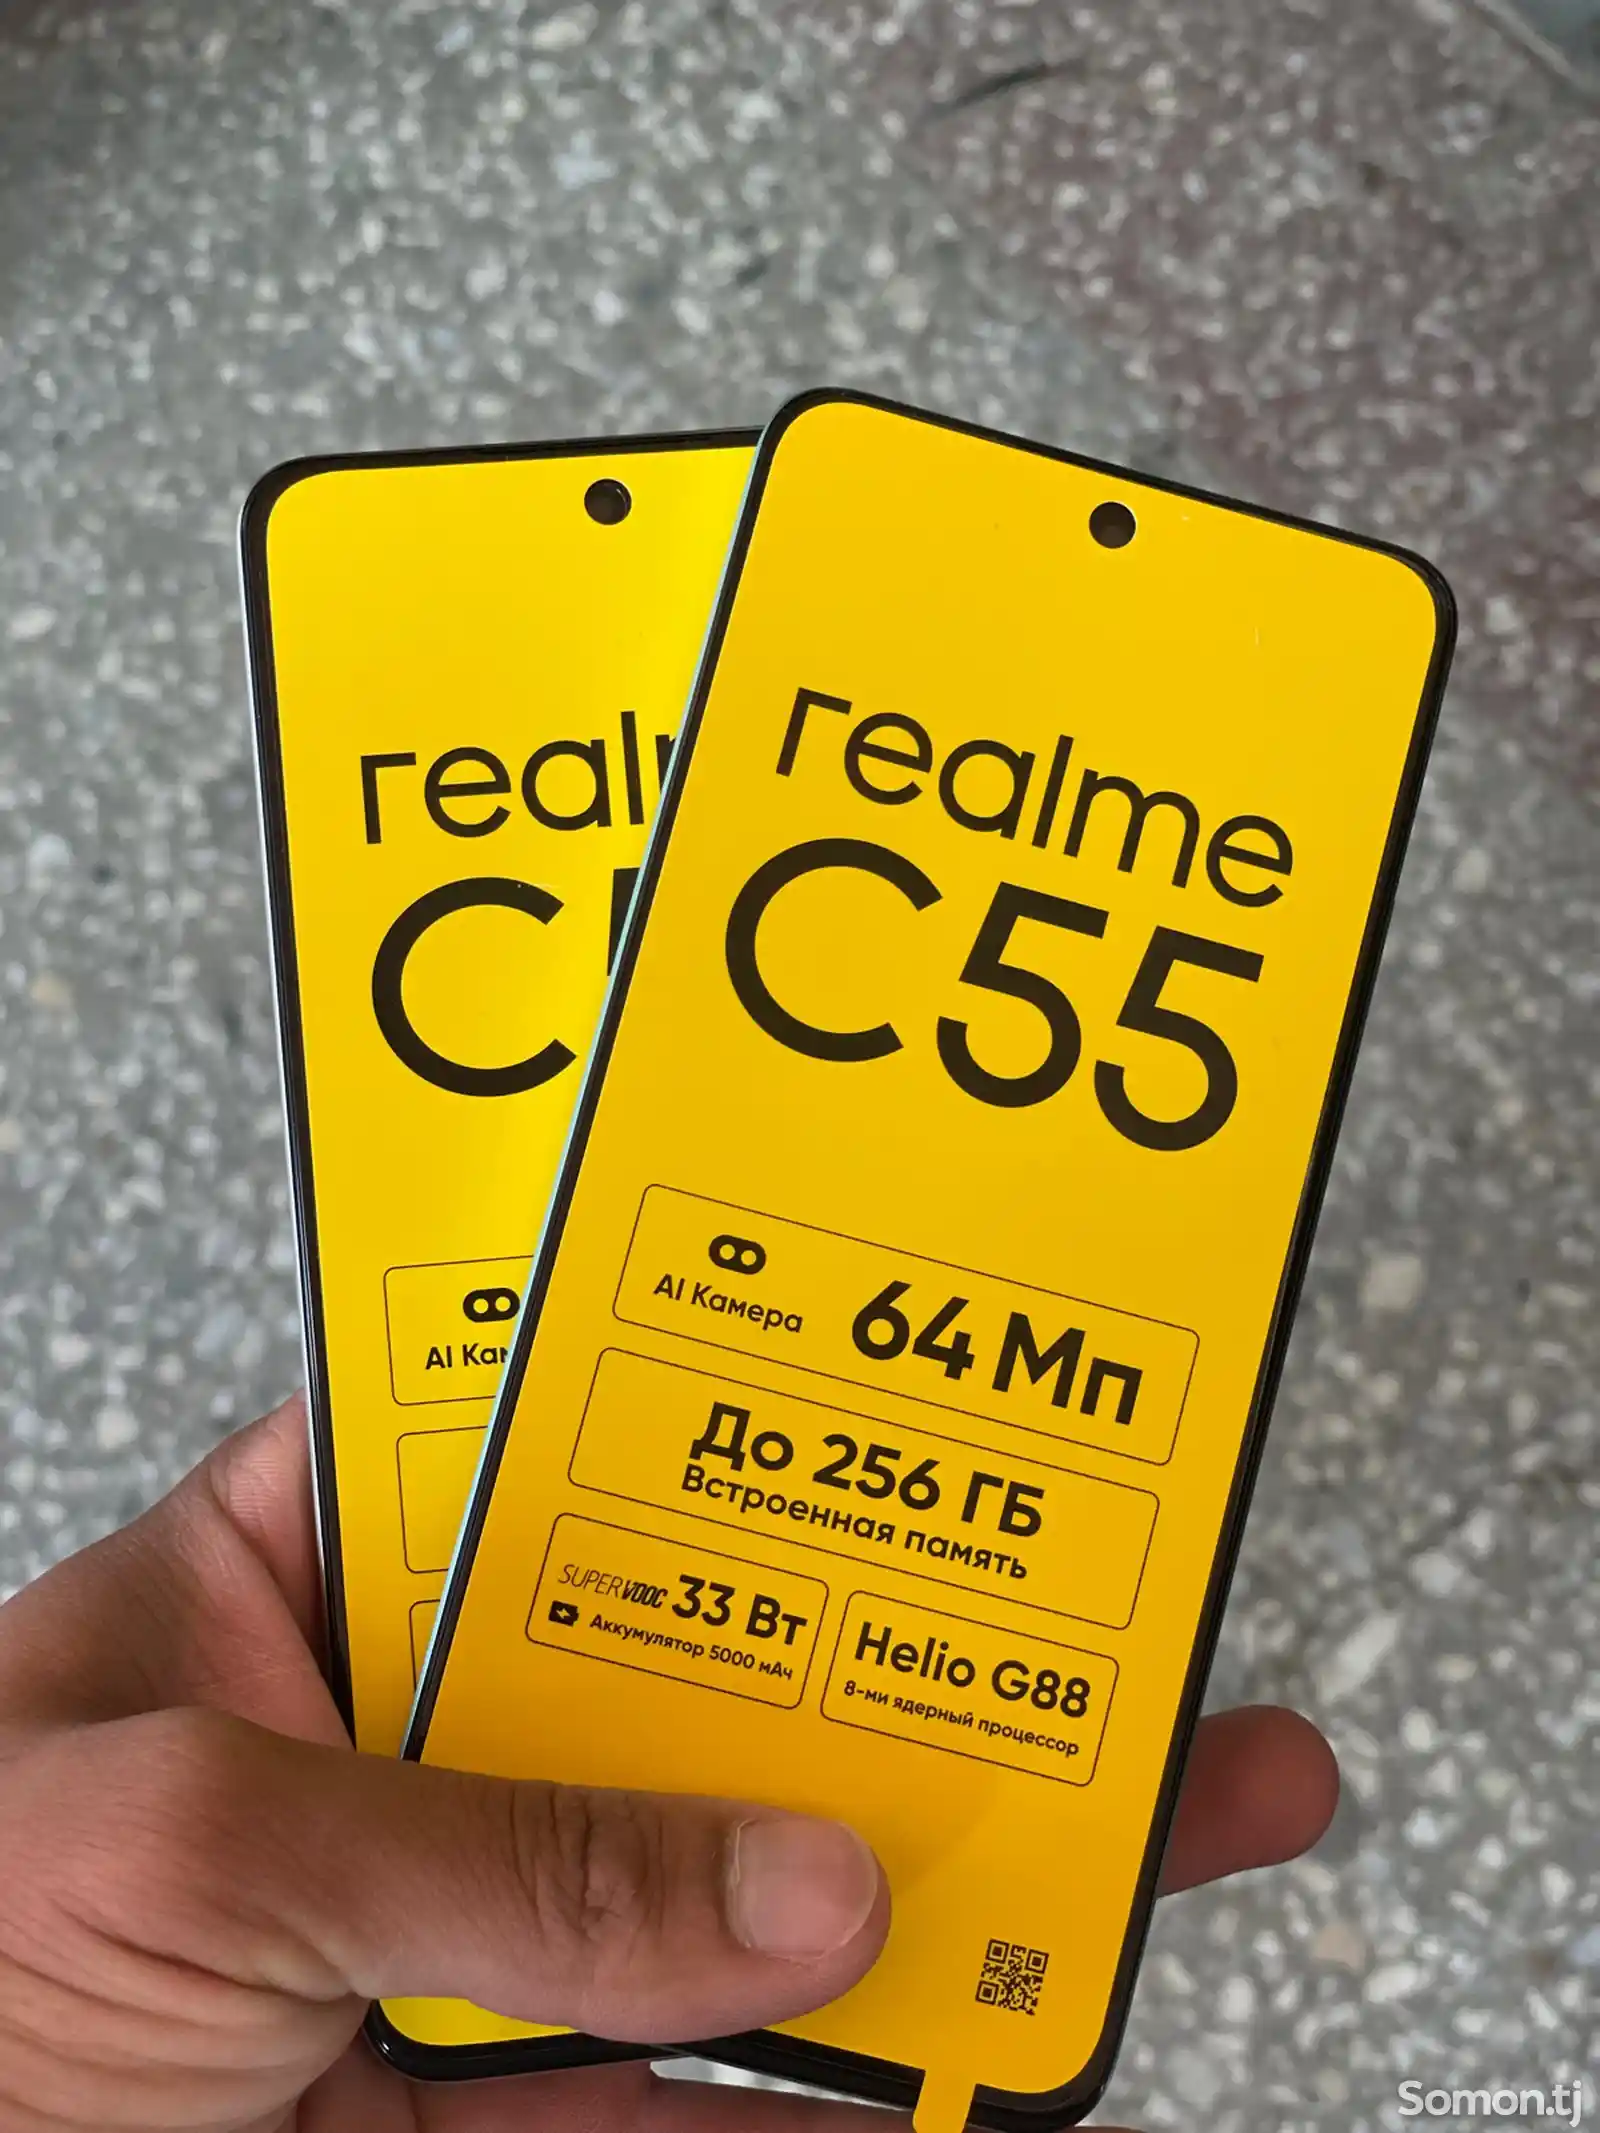 Realmе C55-3